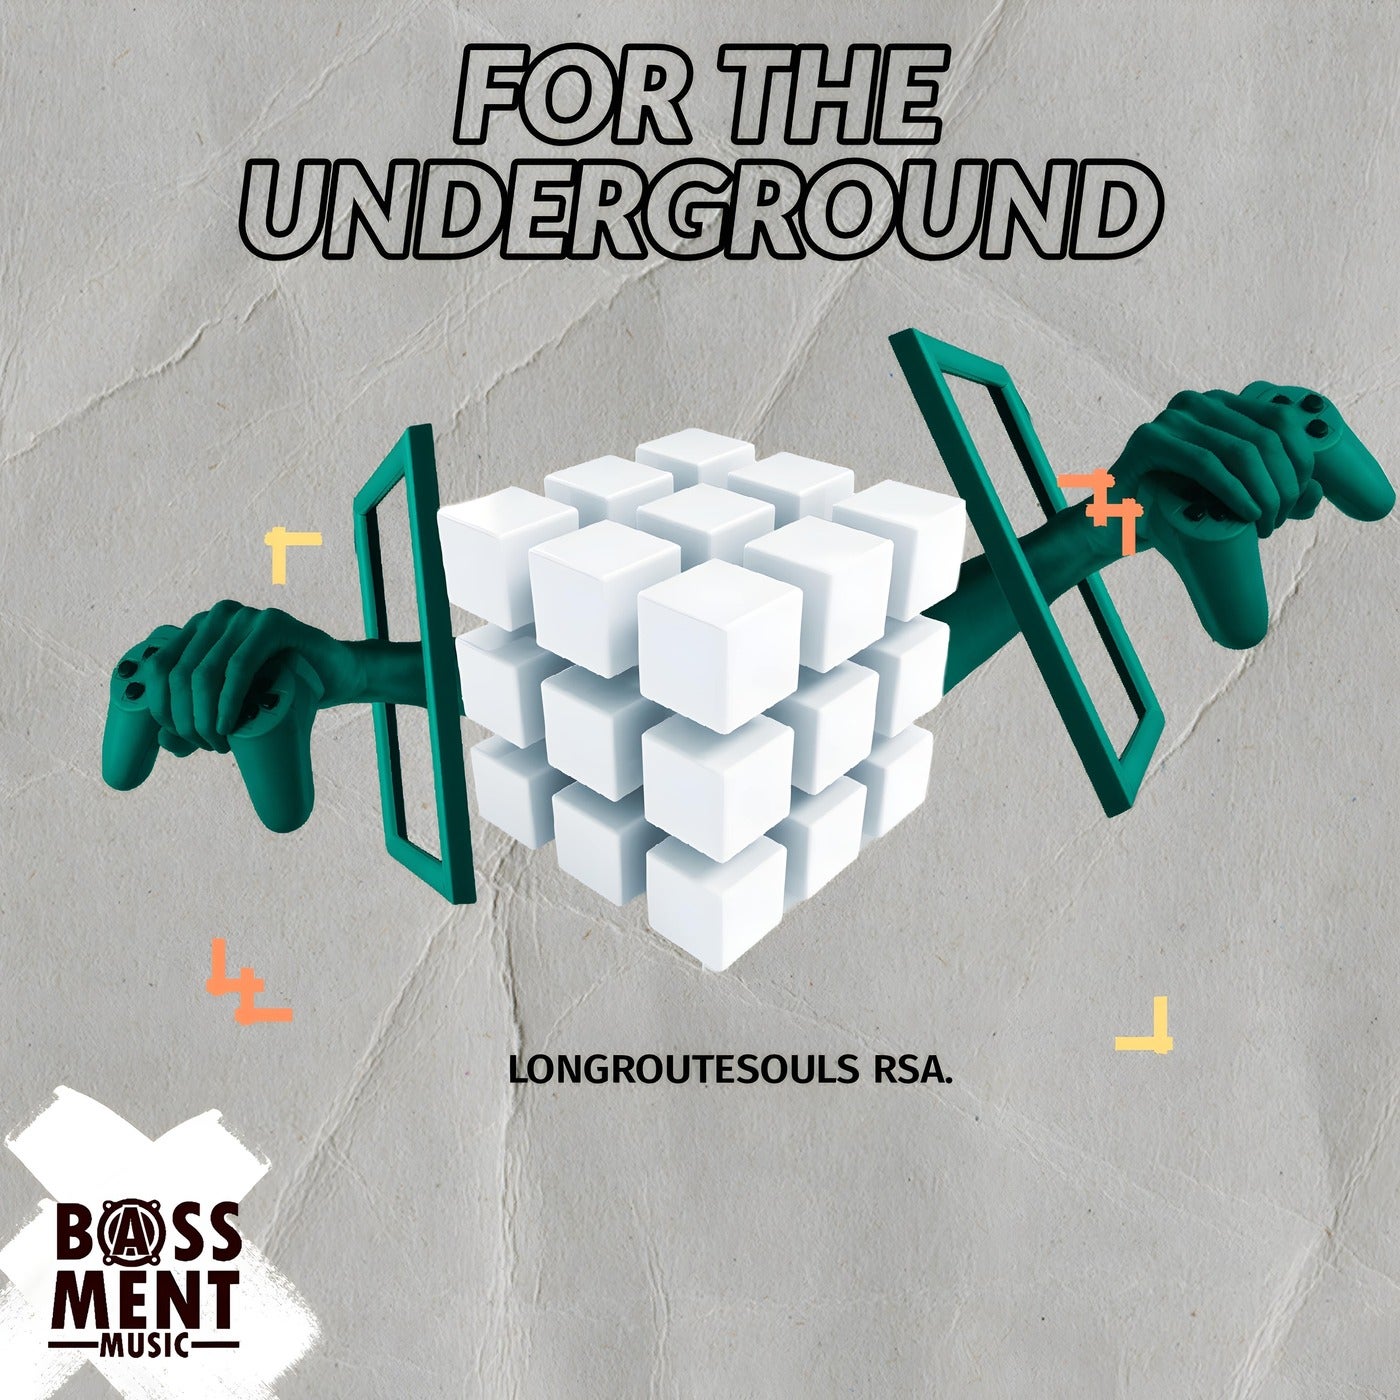 For the Underground